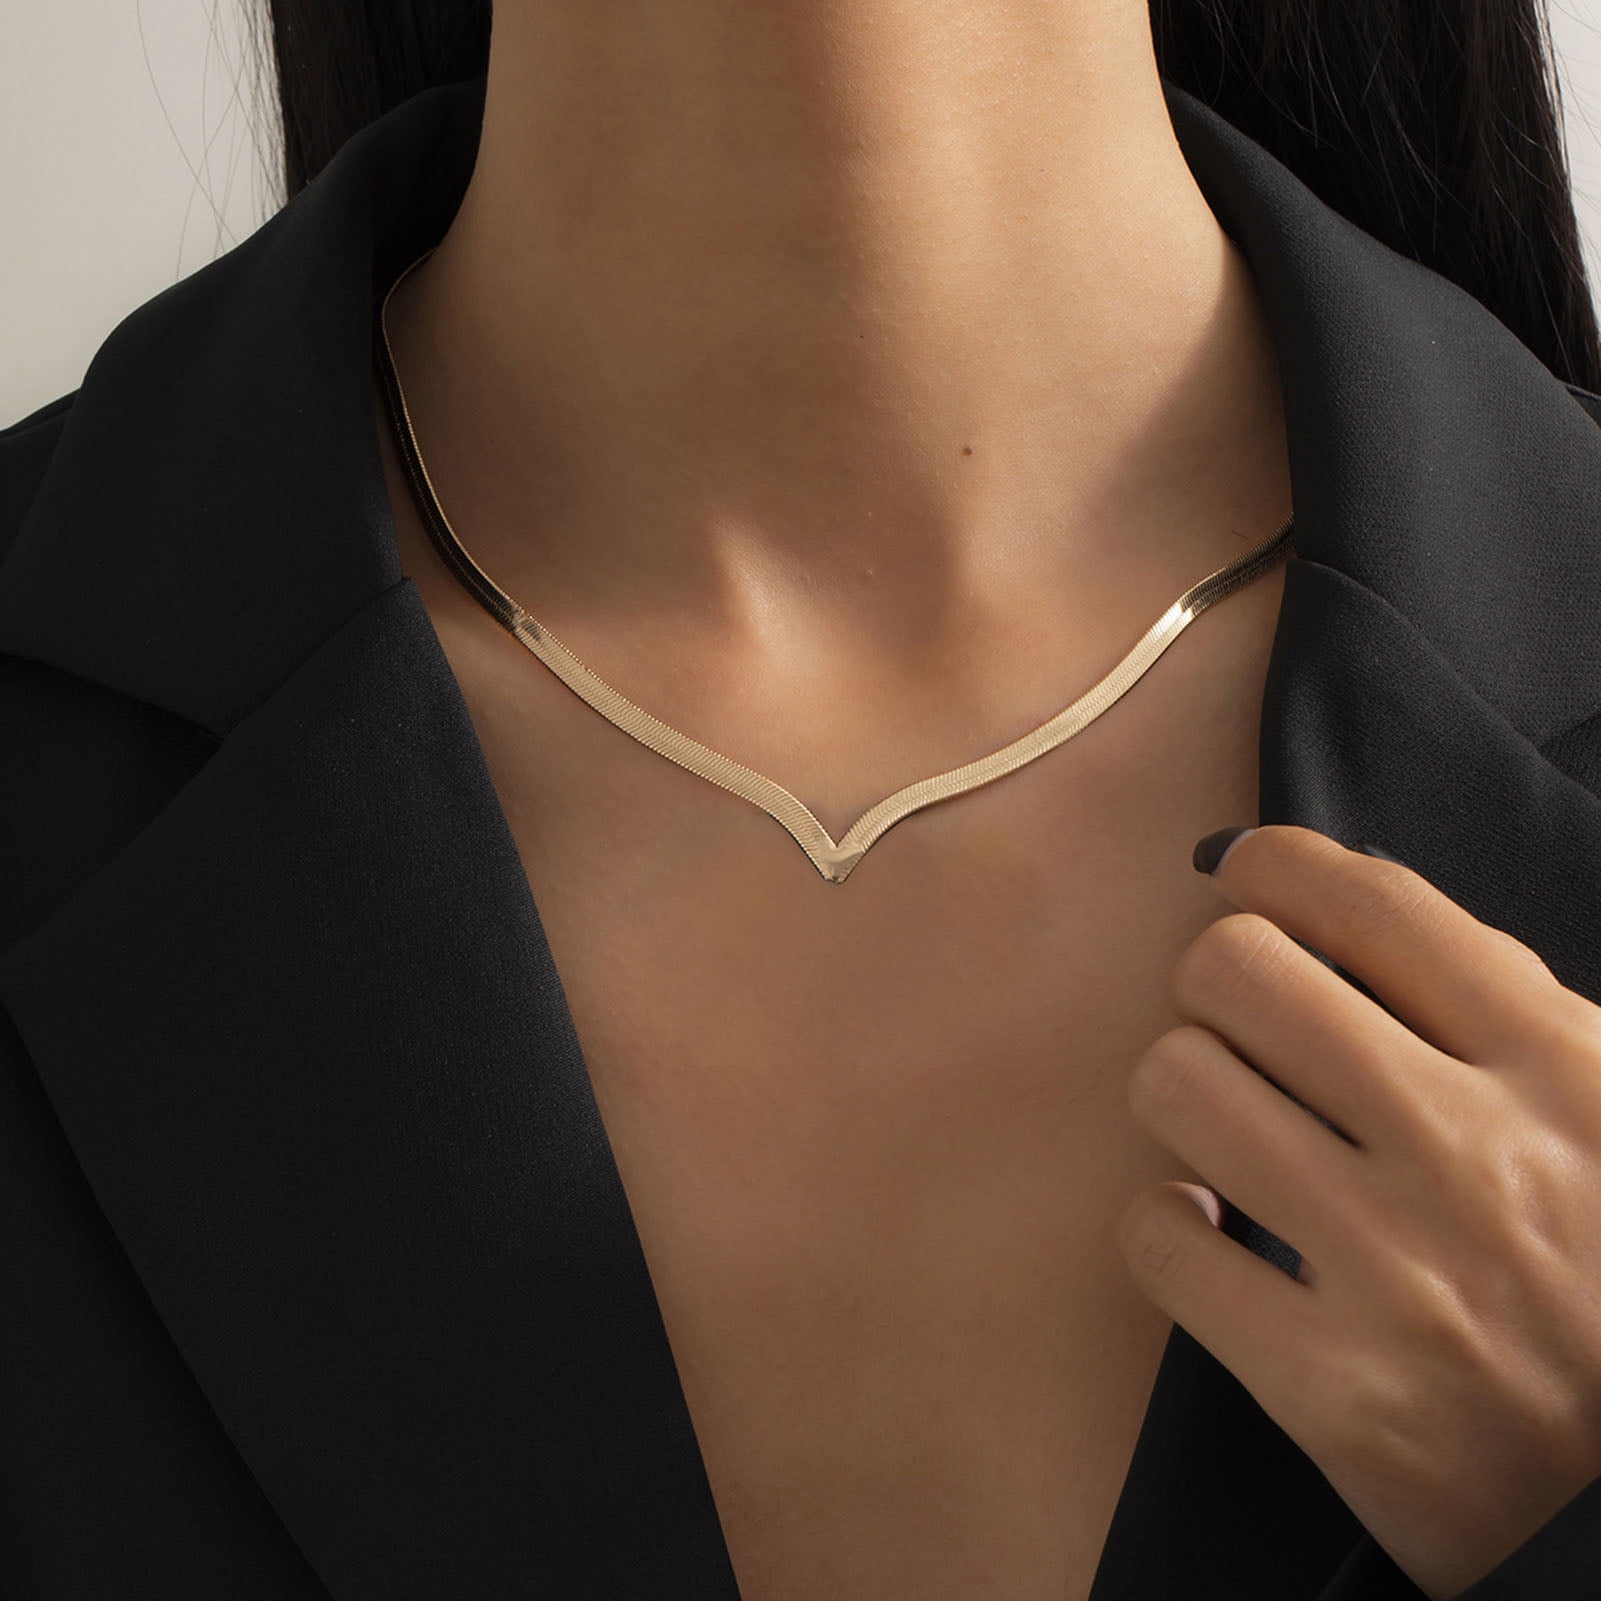 Necklace Heart Pendant Gold Silver Chain Jewellery Women Choker Statement 